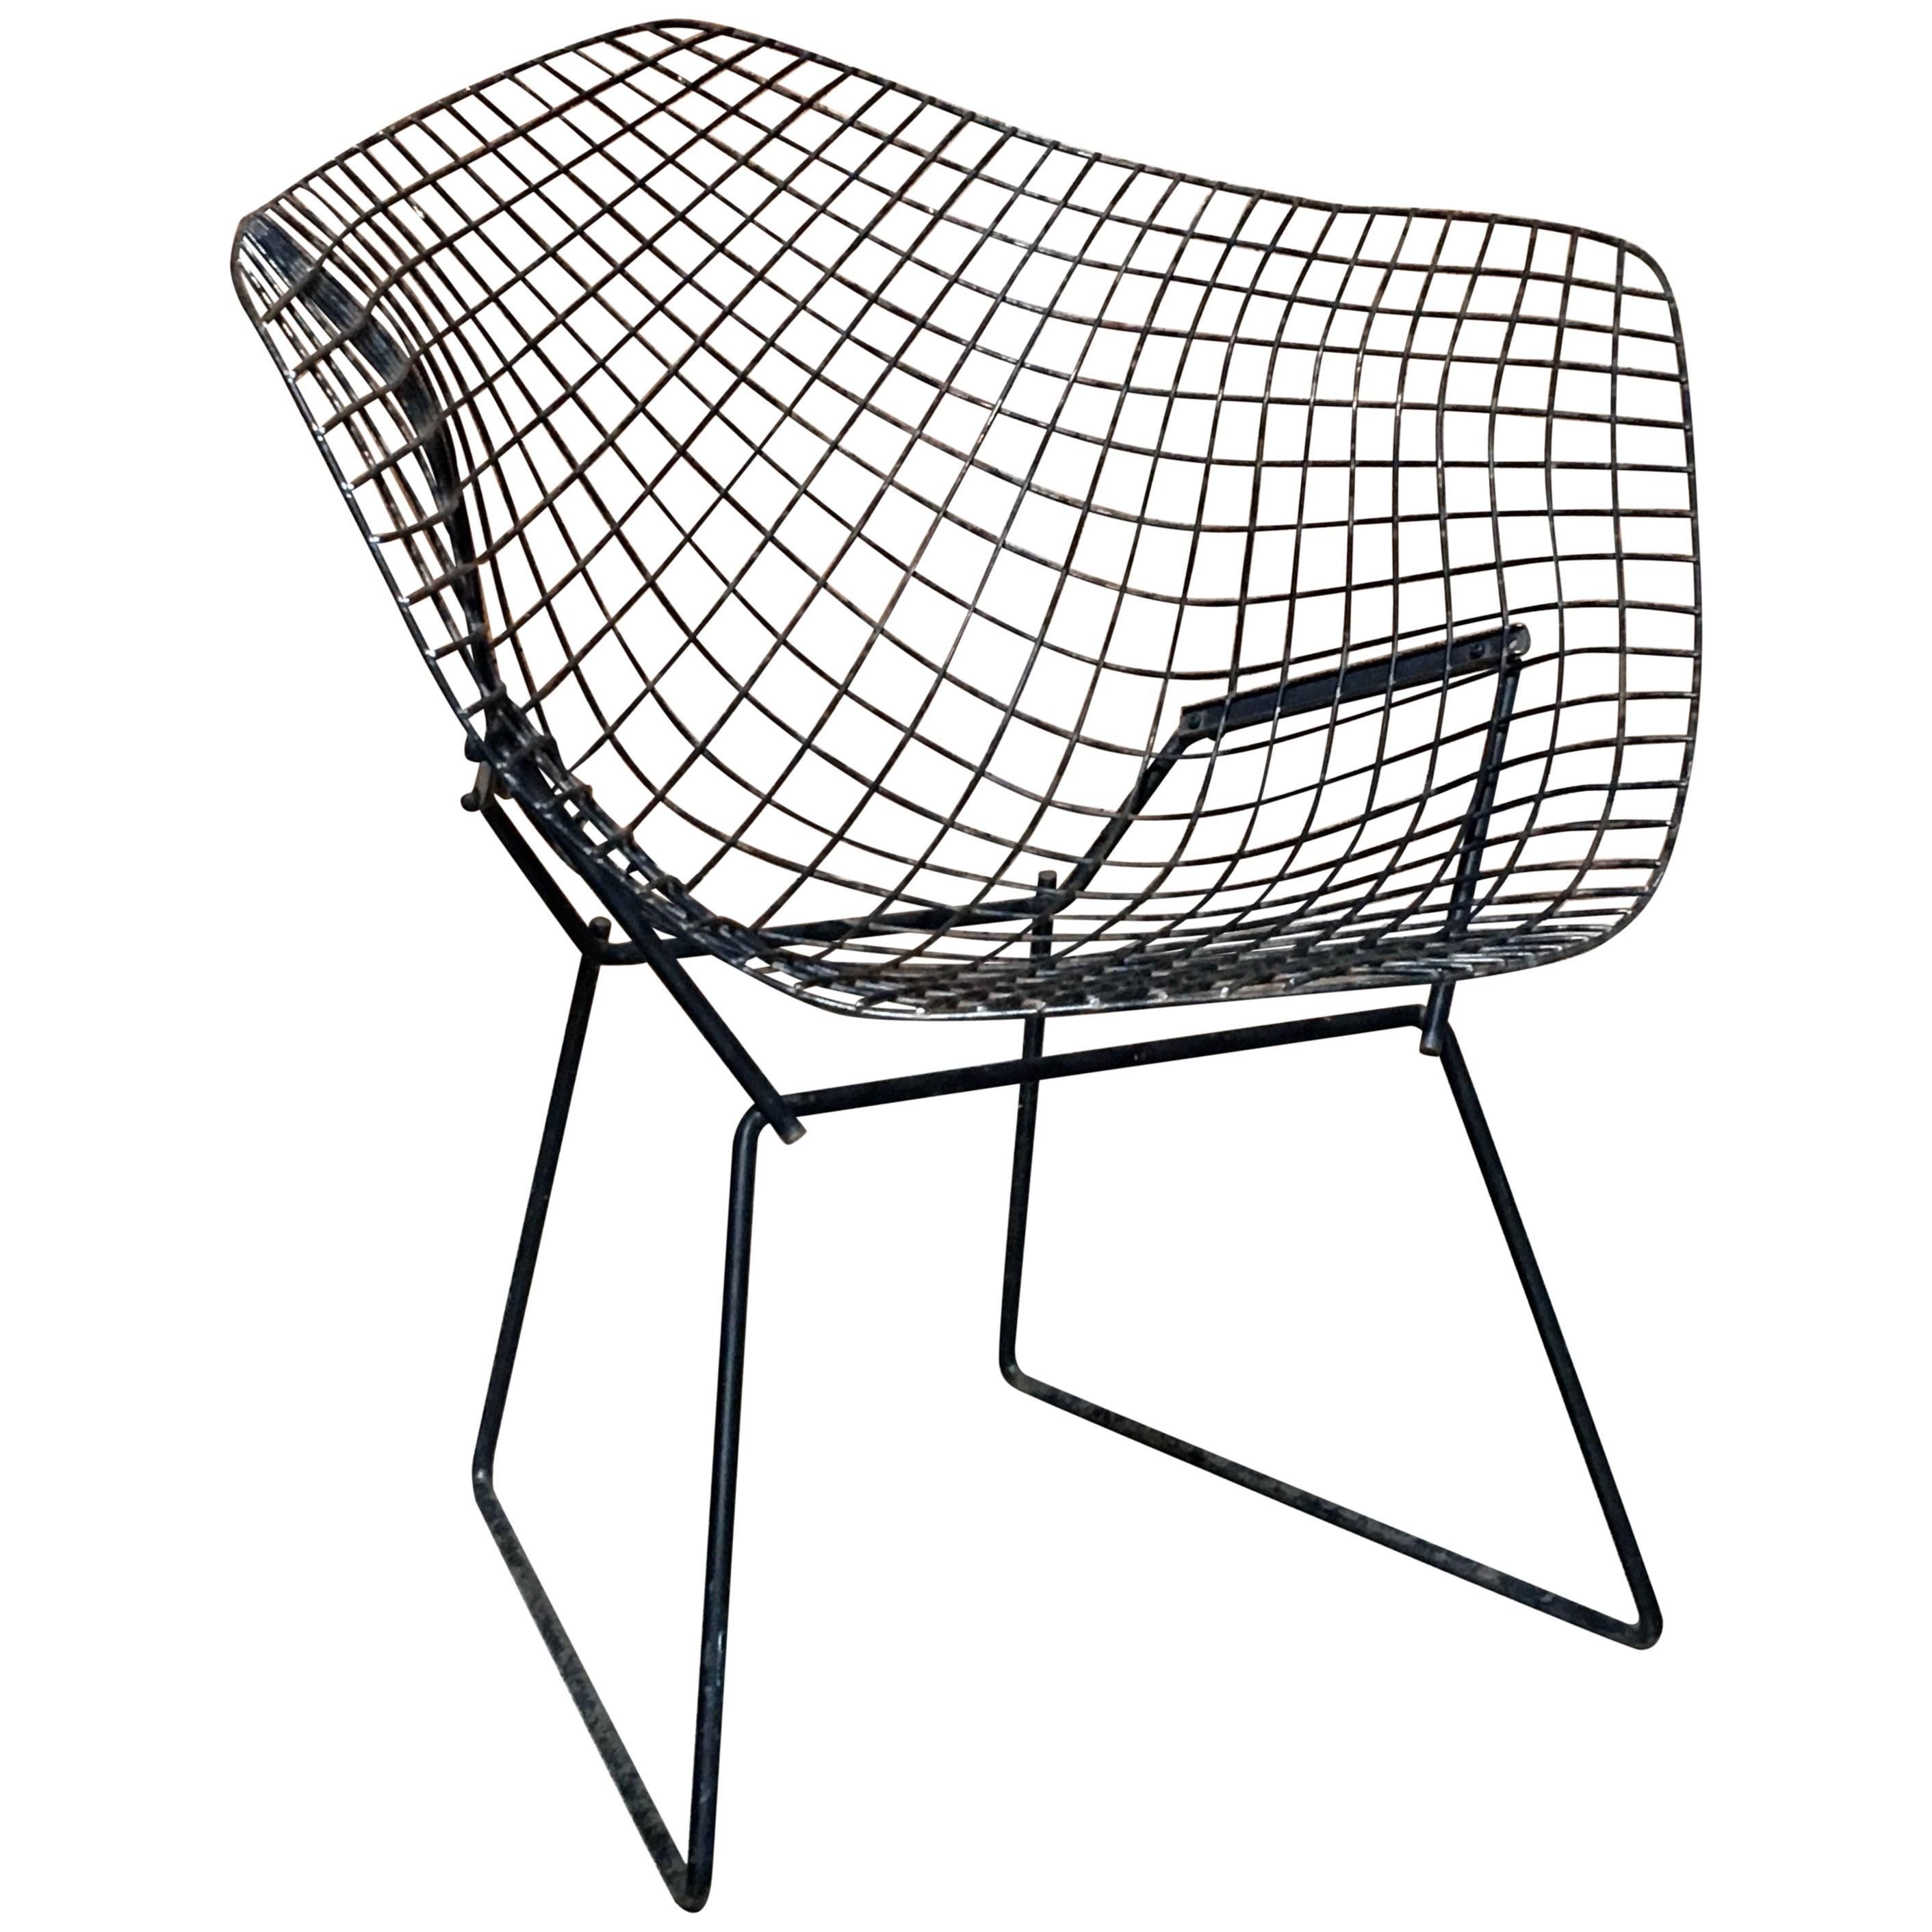 Harry Bertoia "Diamond Chair"